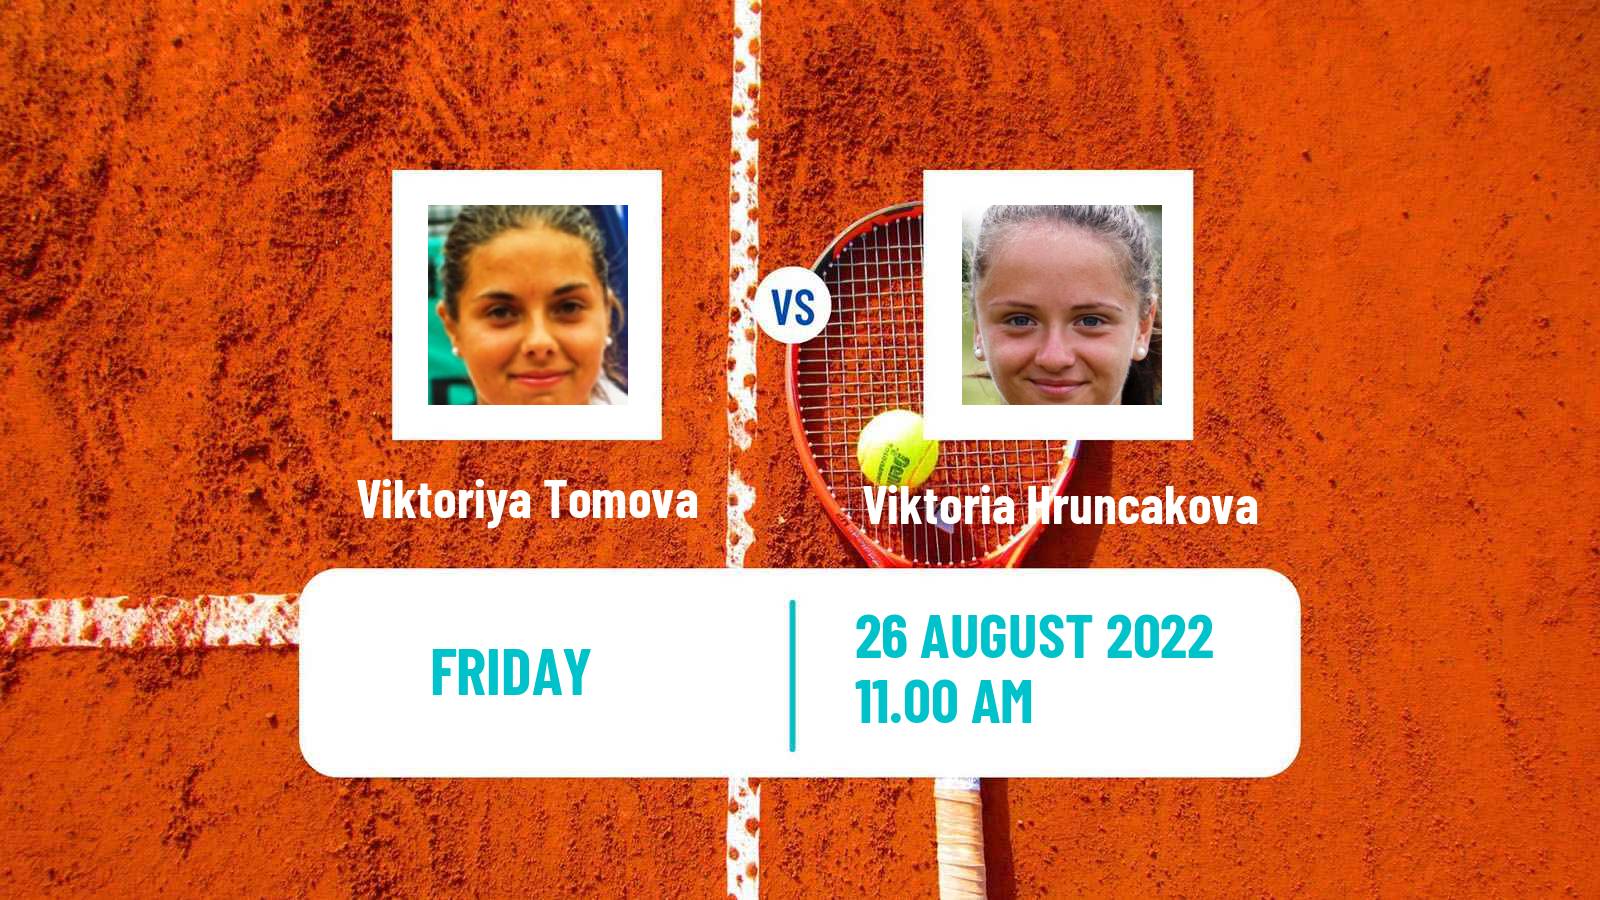 Tennis WTA US Open Viktoriya Tomova - Viktoria Hruncakova